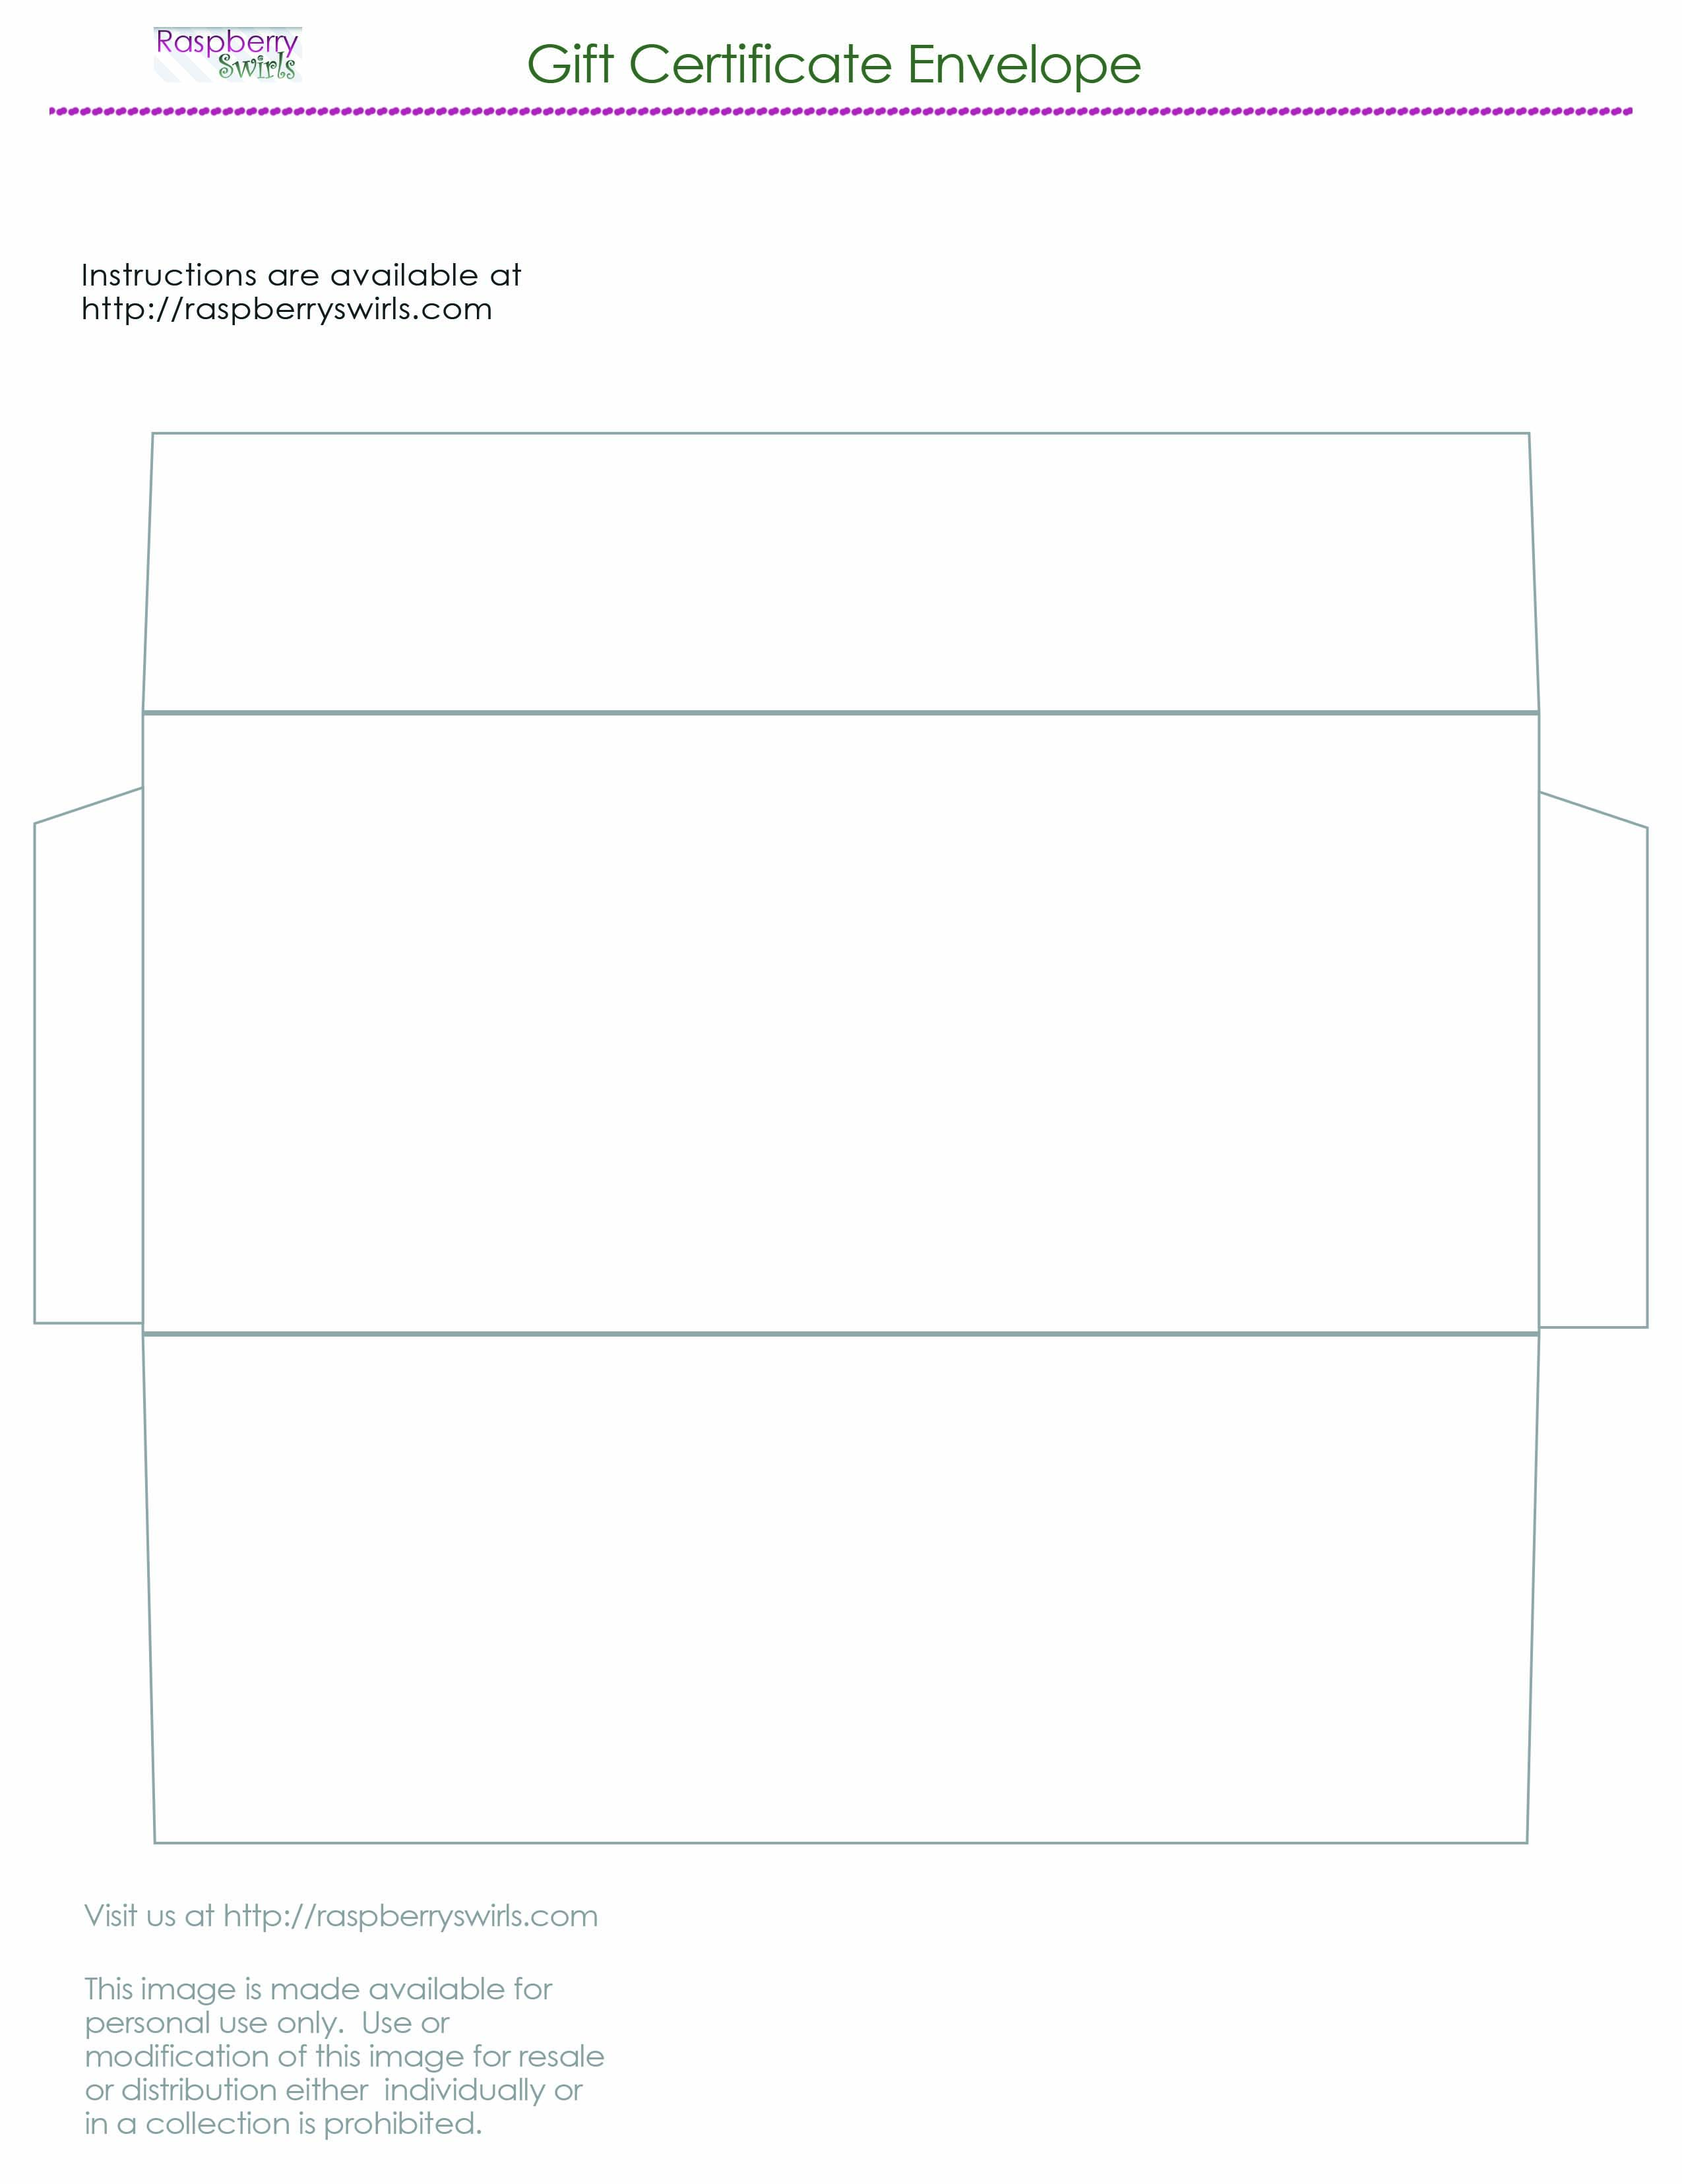 printable-gift-certificate-envelope-template-raspberry-swirls